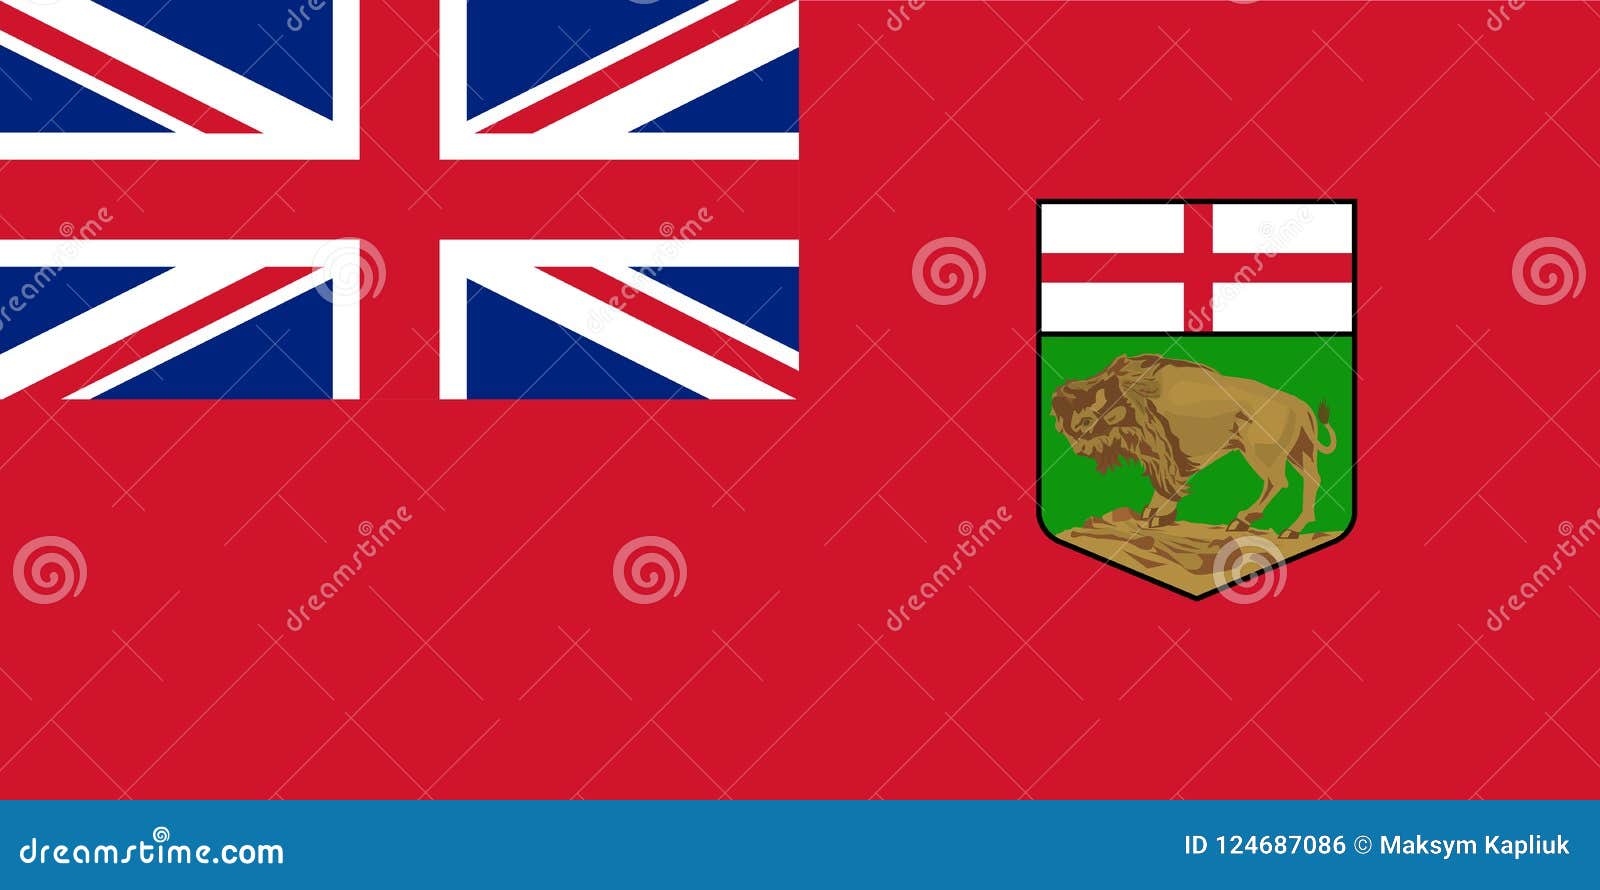  flag of manitoba province canada. winnipeg